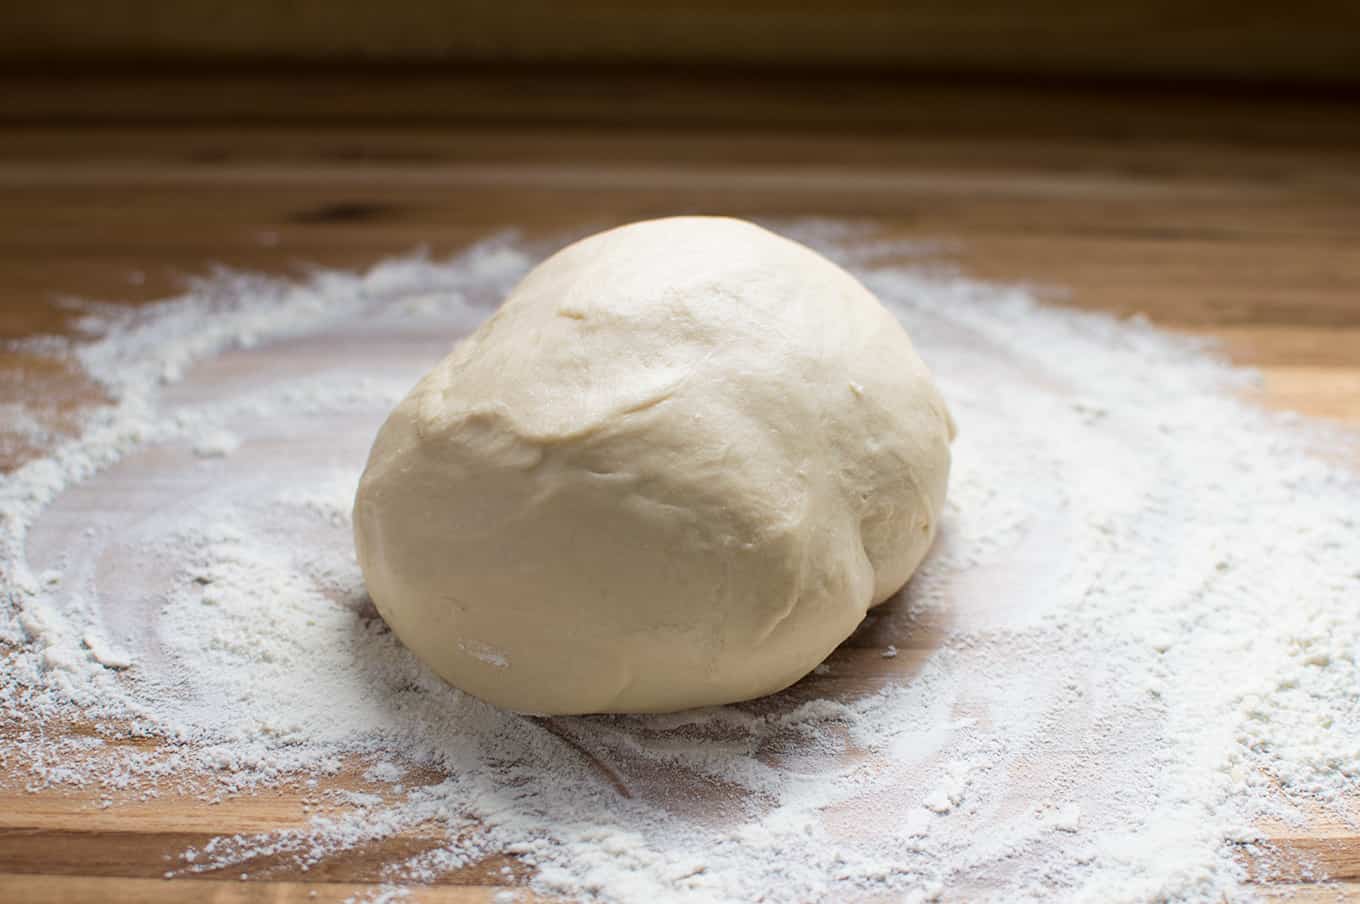 A ball of dough on a floured cutting board.